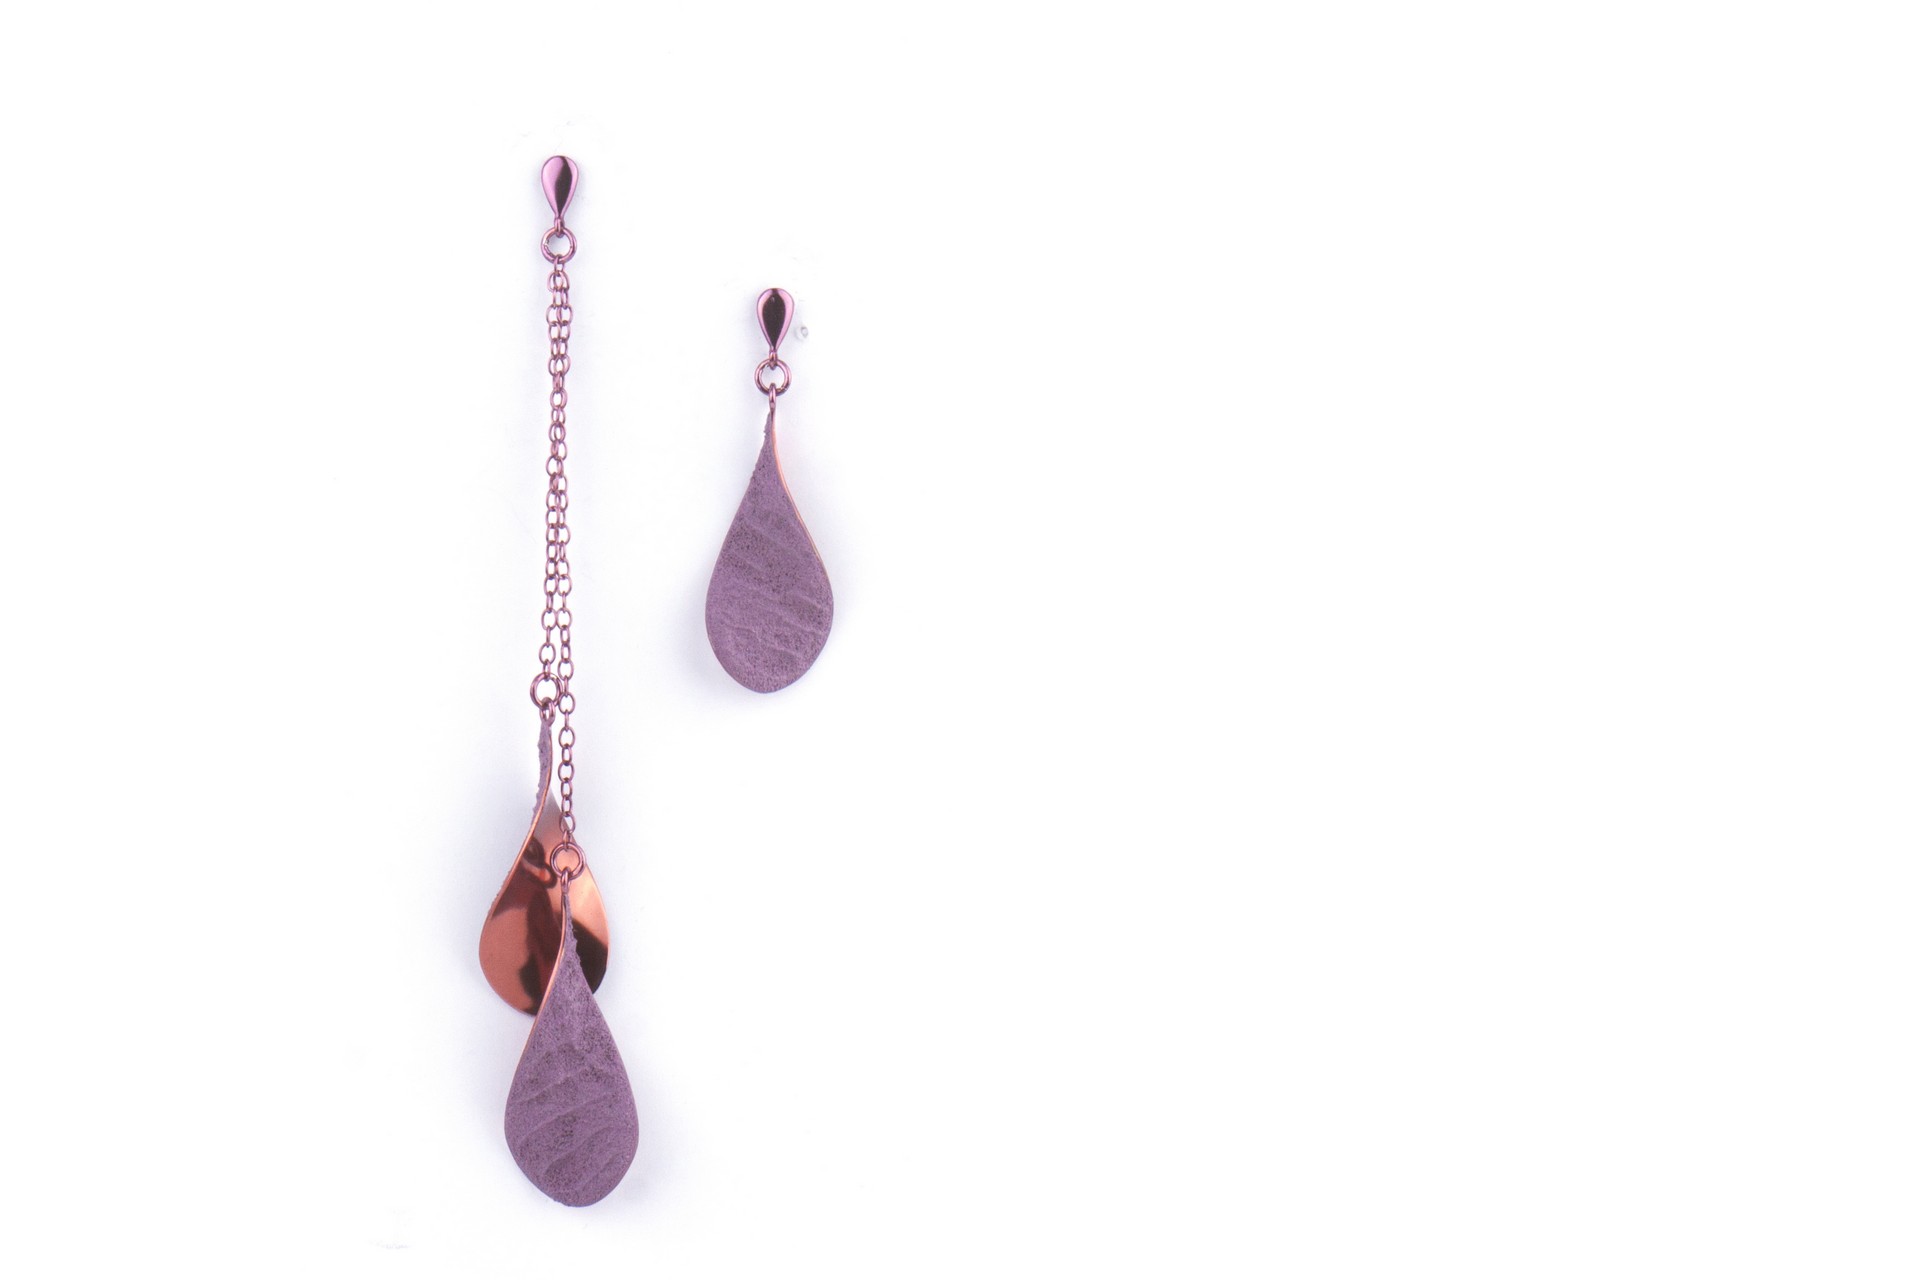 Kadi_Veesaar_Jewellery_Tinkle_Chain_earrings_maroon